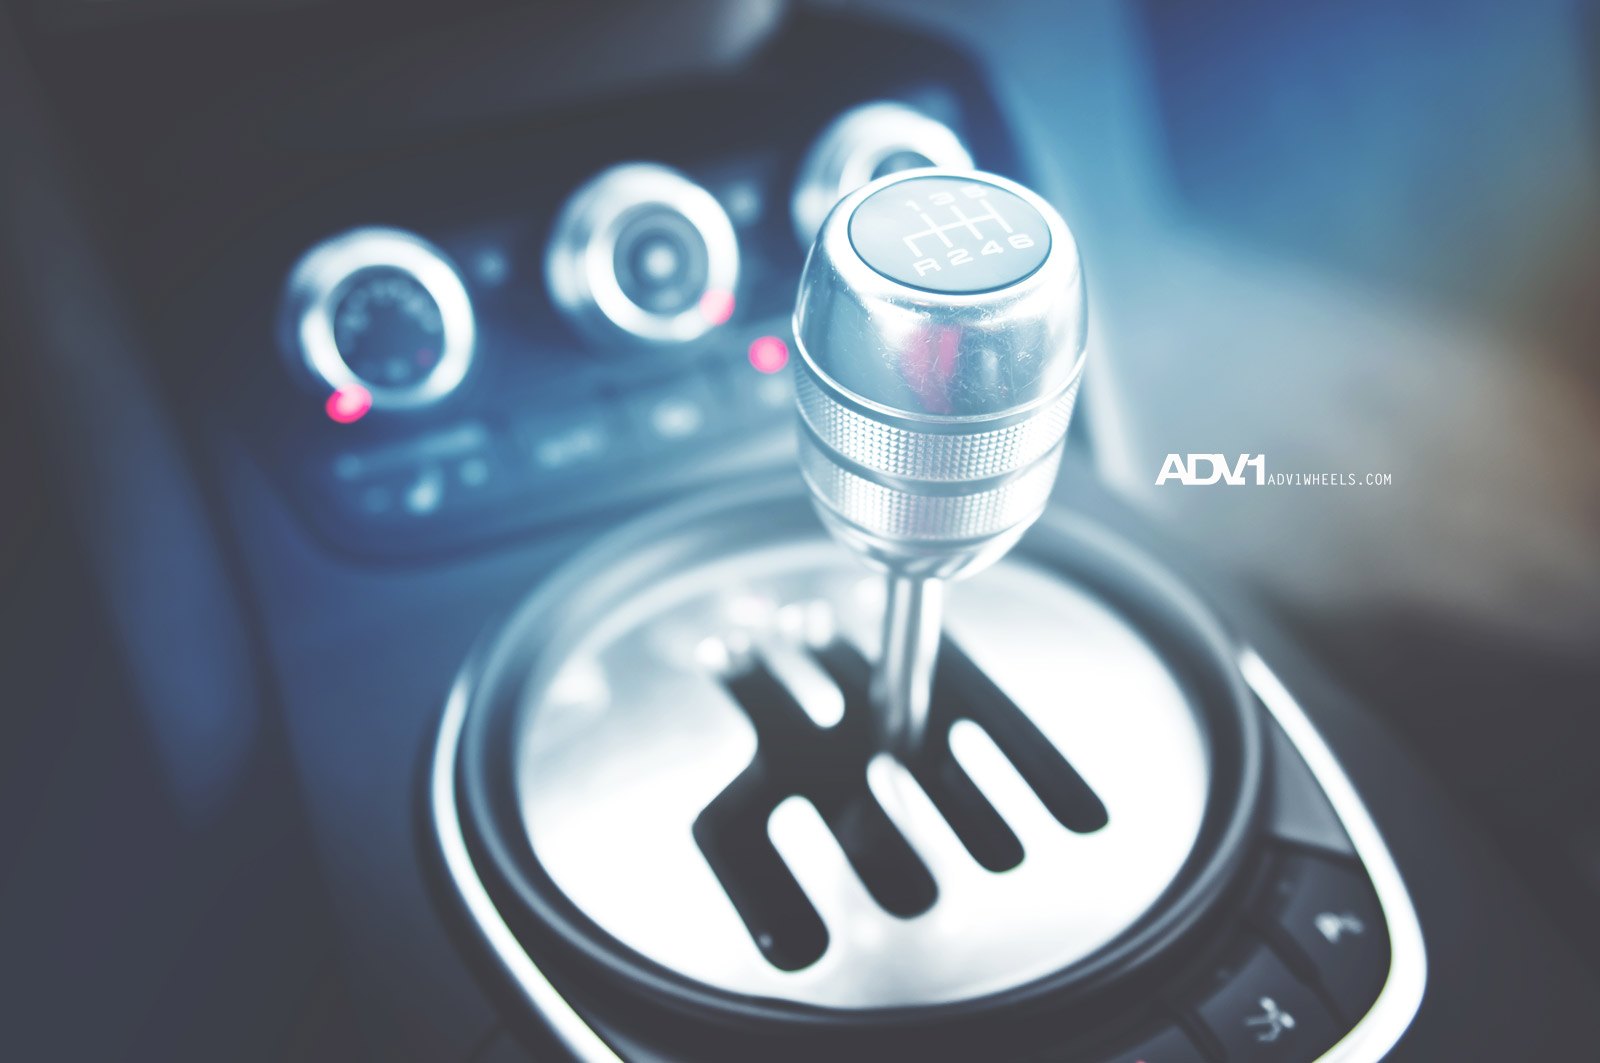 Silver Audi R8 with Custom Shift Knob - Photo by ADV.1